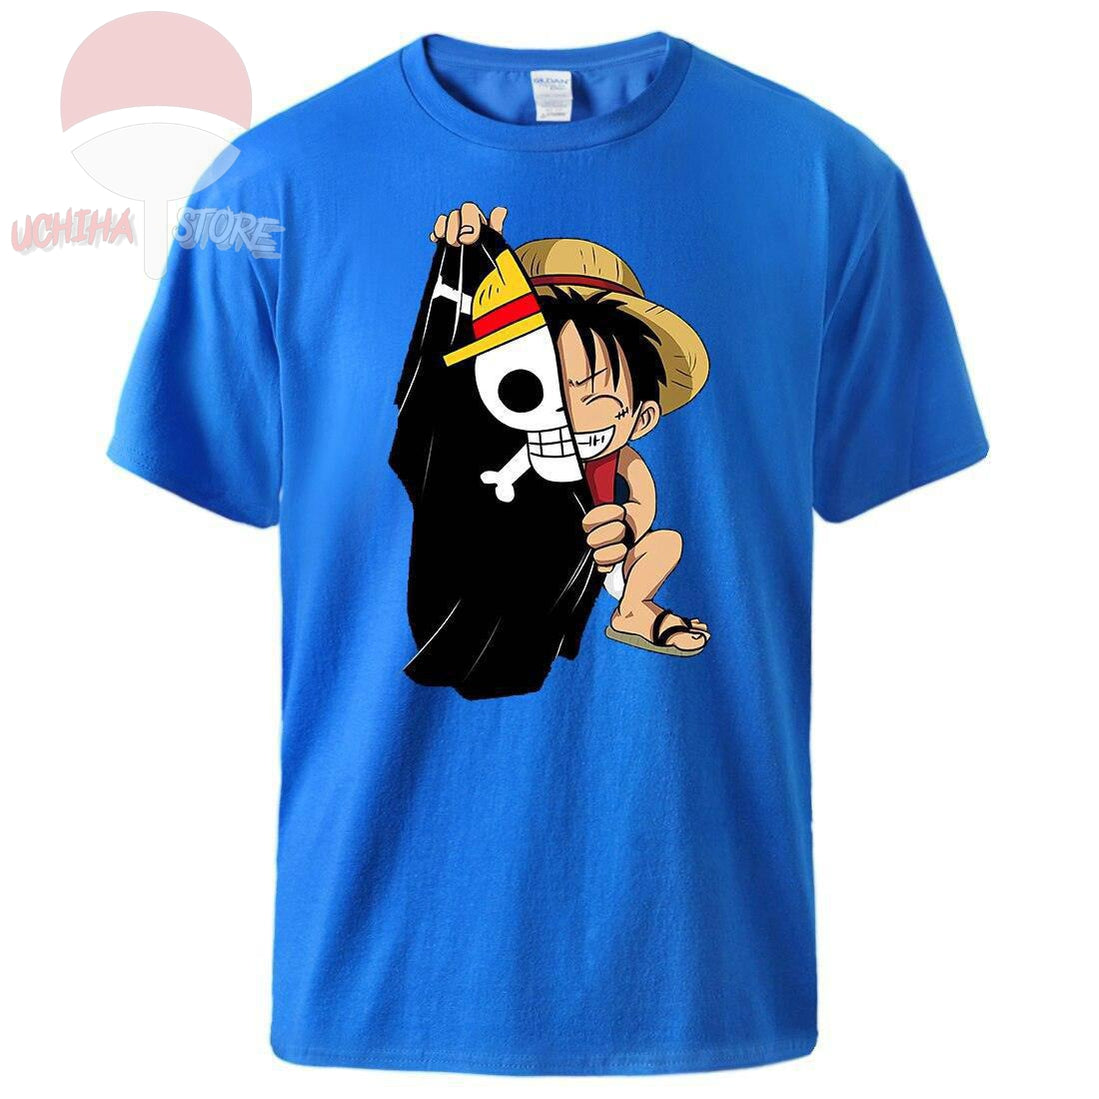 One Piece Luffy T-shirt - Uchiha Store